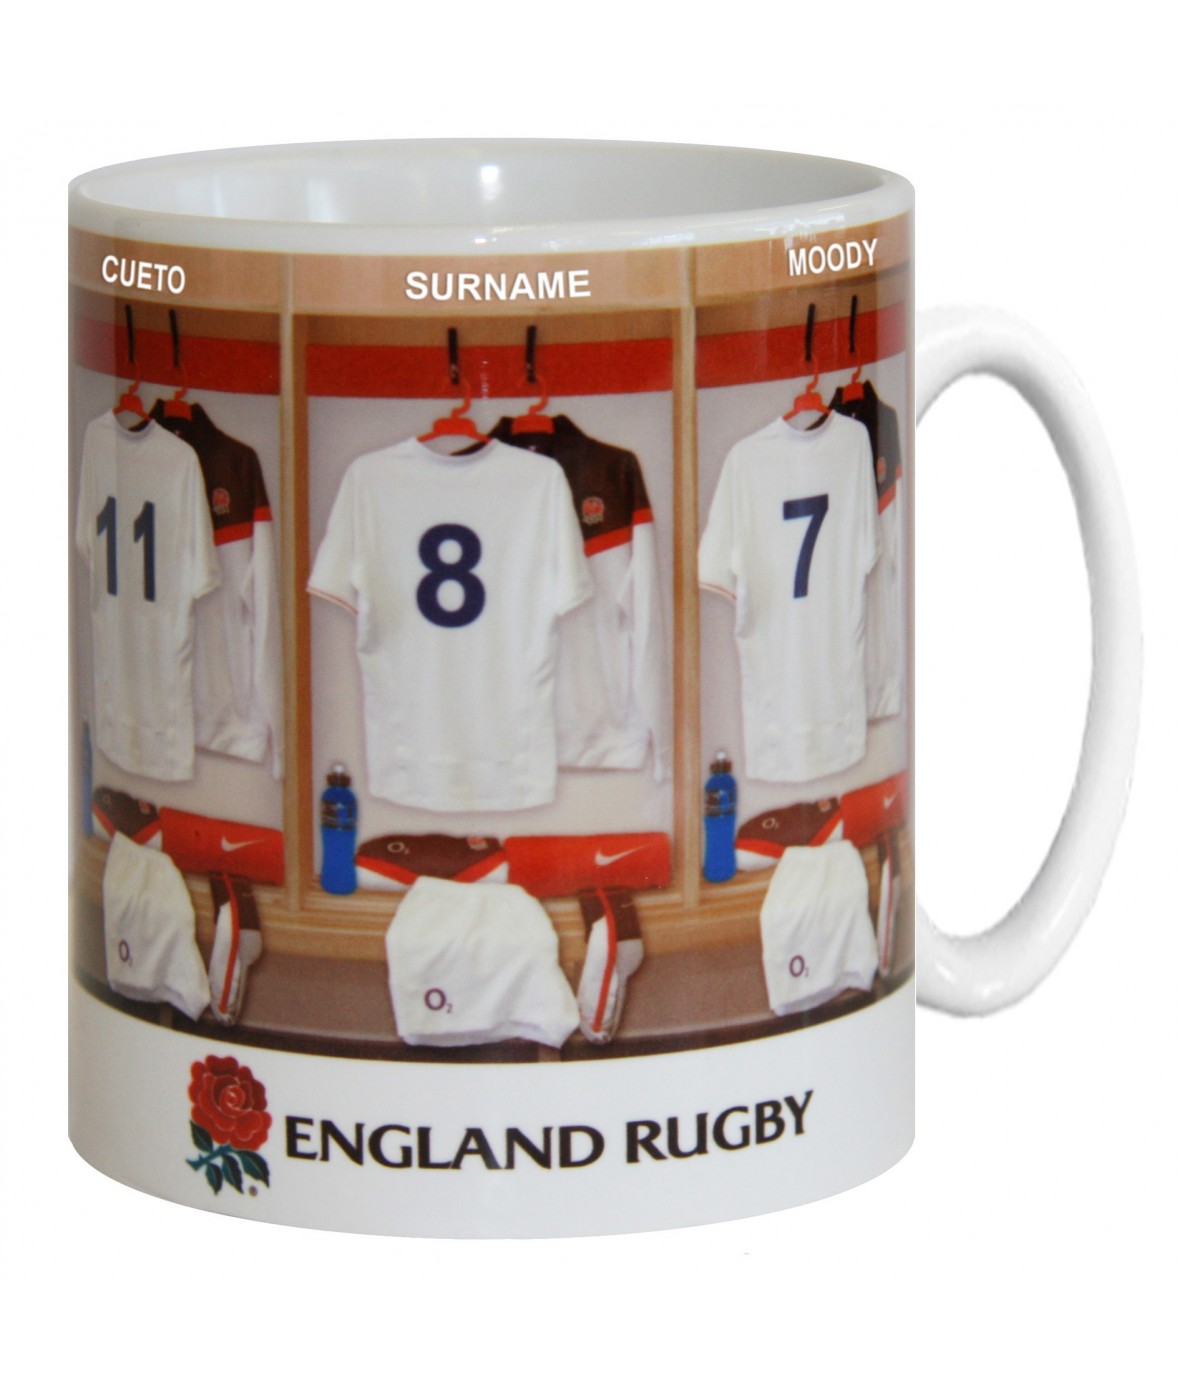 Personalised rugby mugs